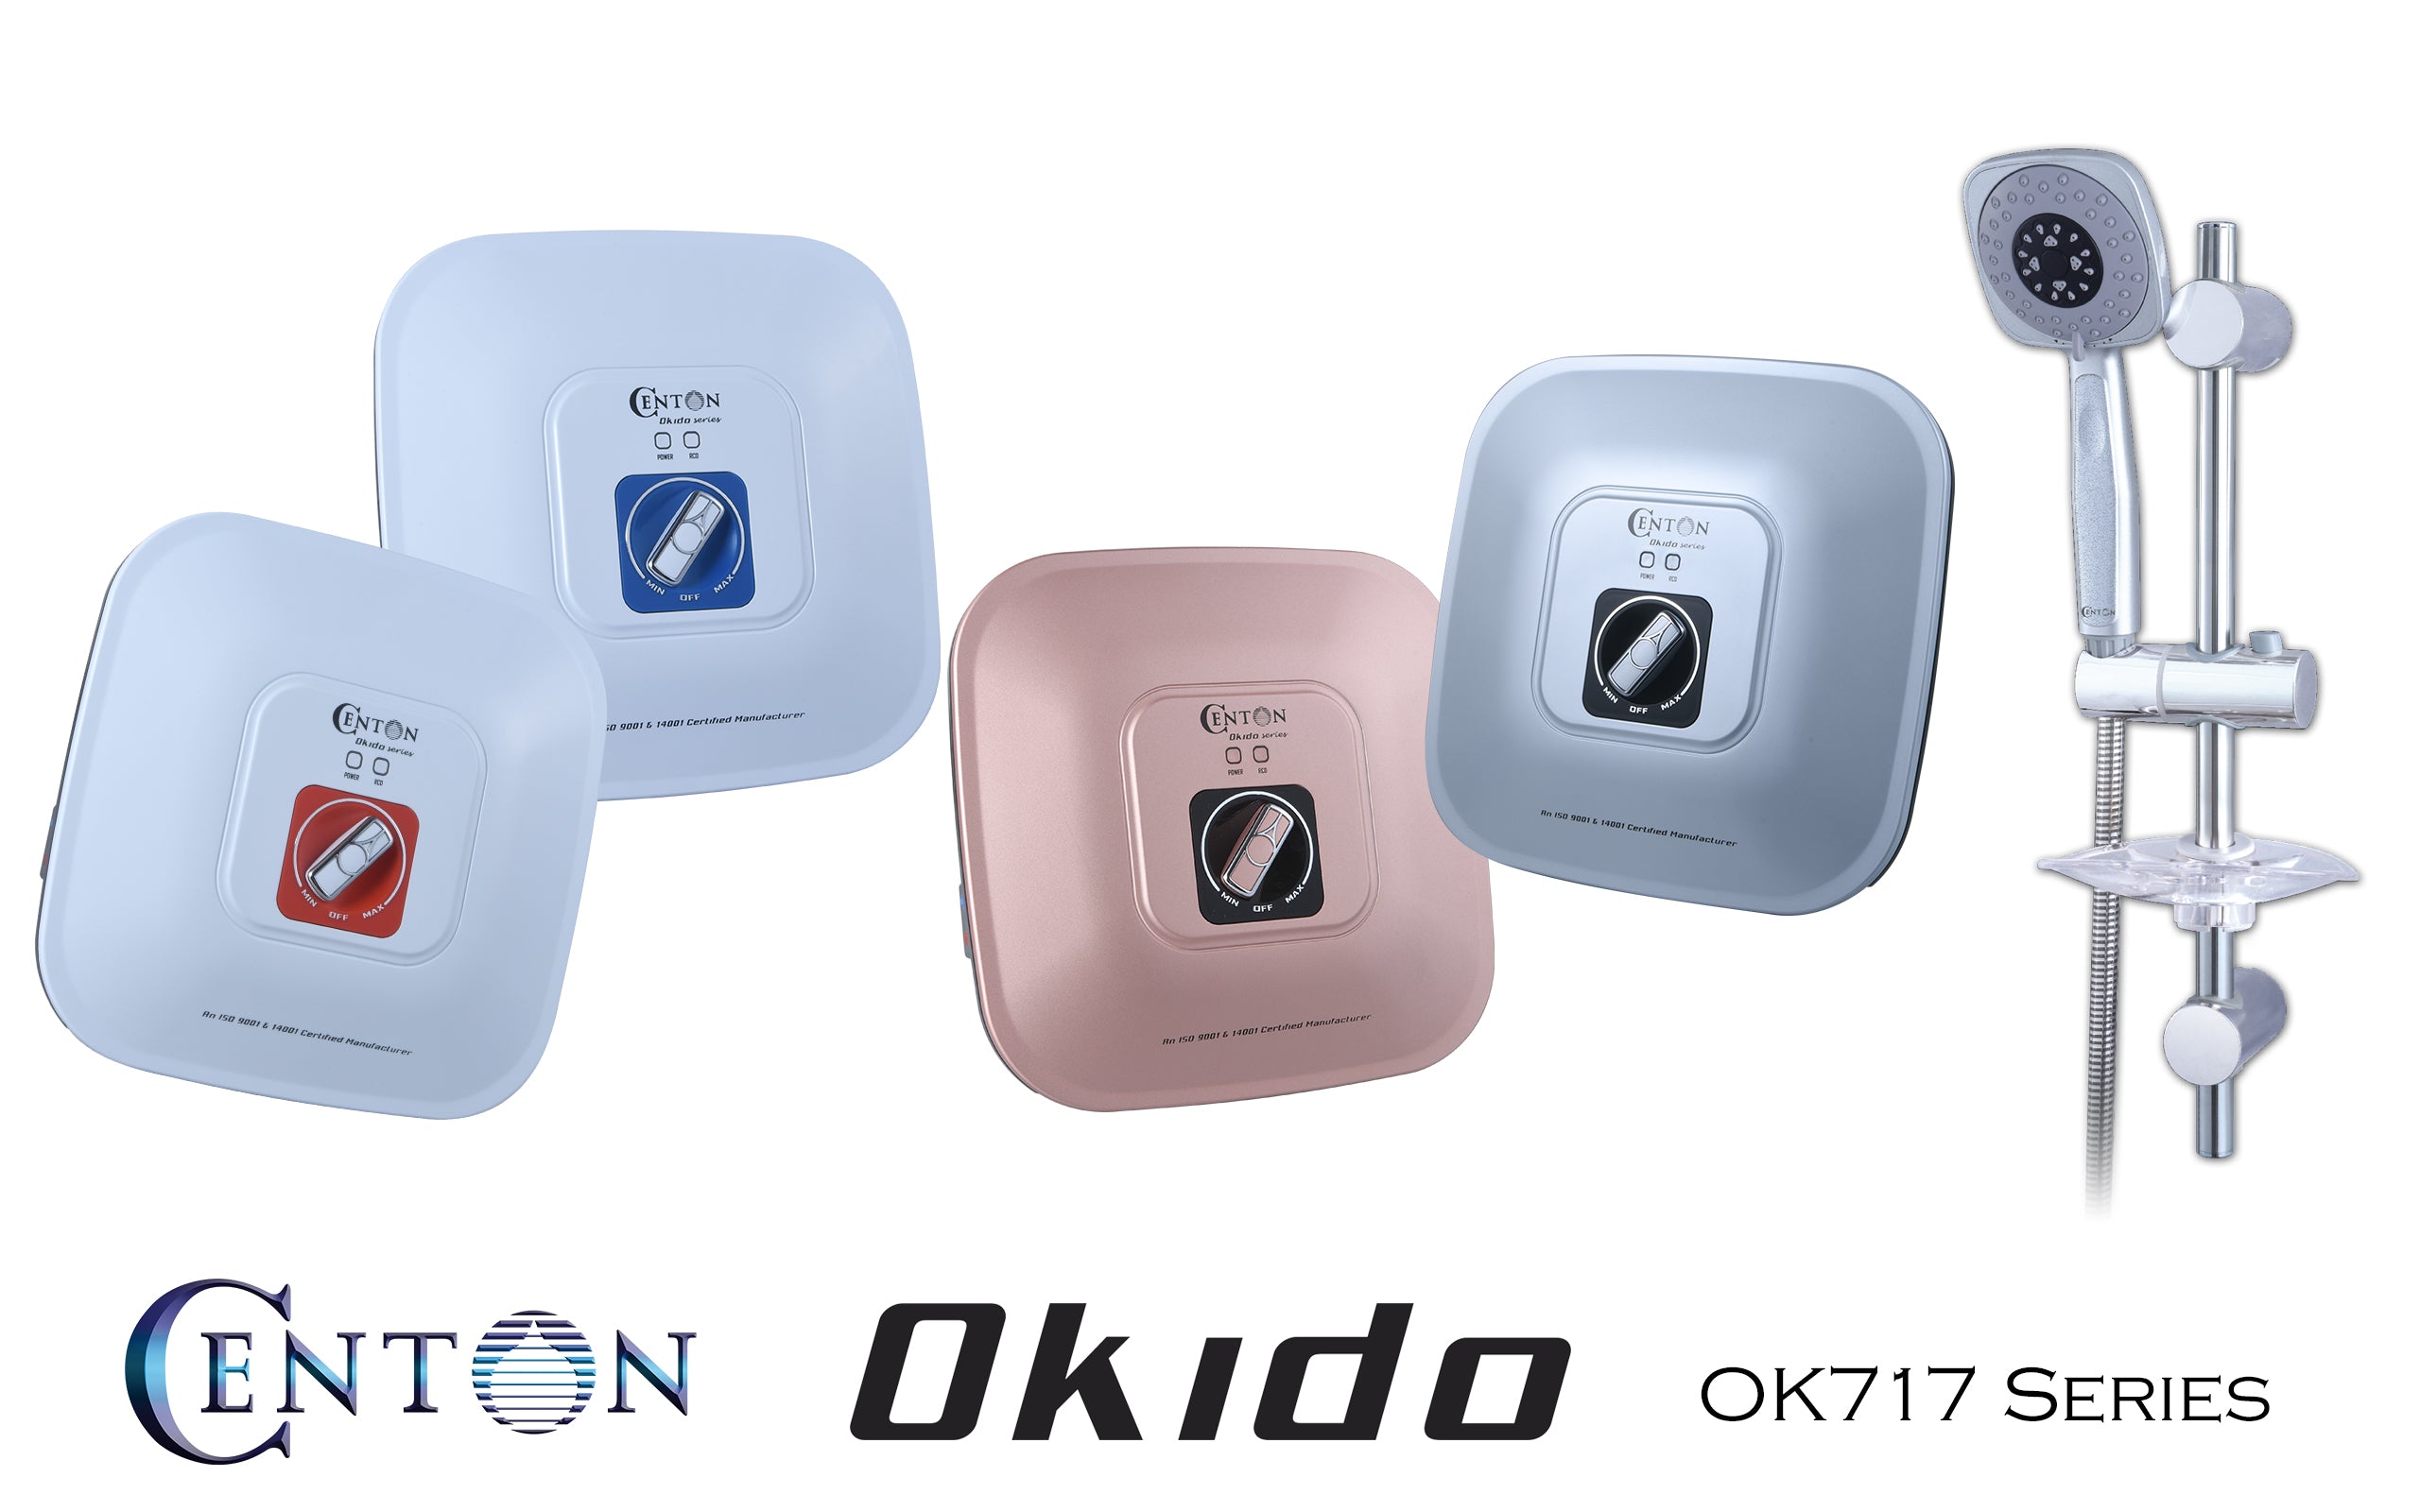 CENTON Okido Series OK717 Onsen.my